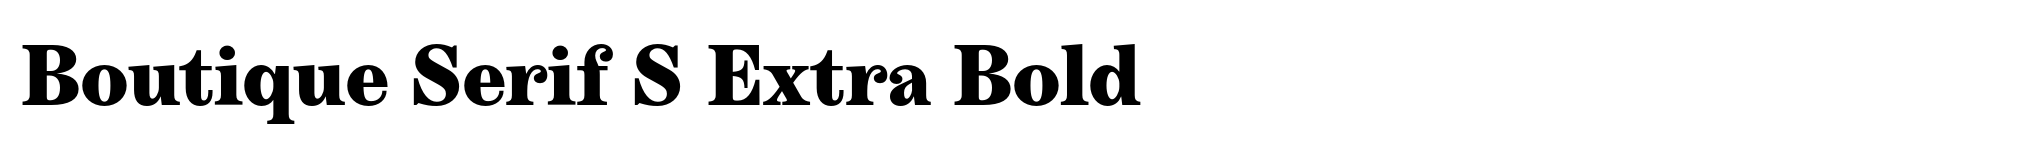 Boutique Serif S Extra Bold image